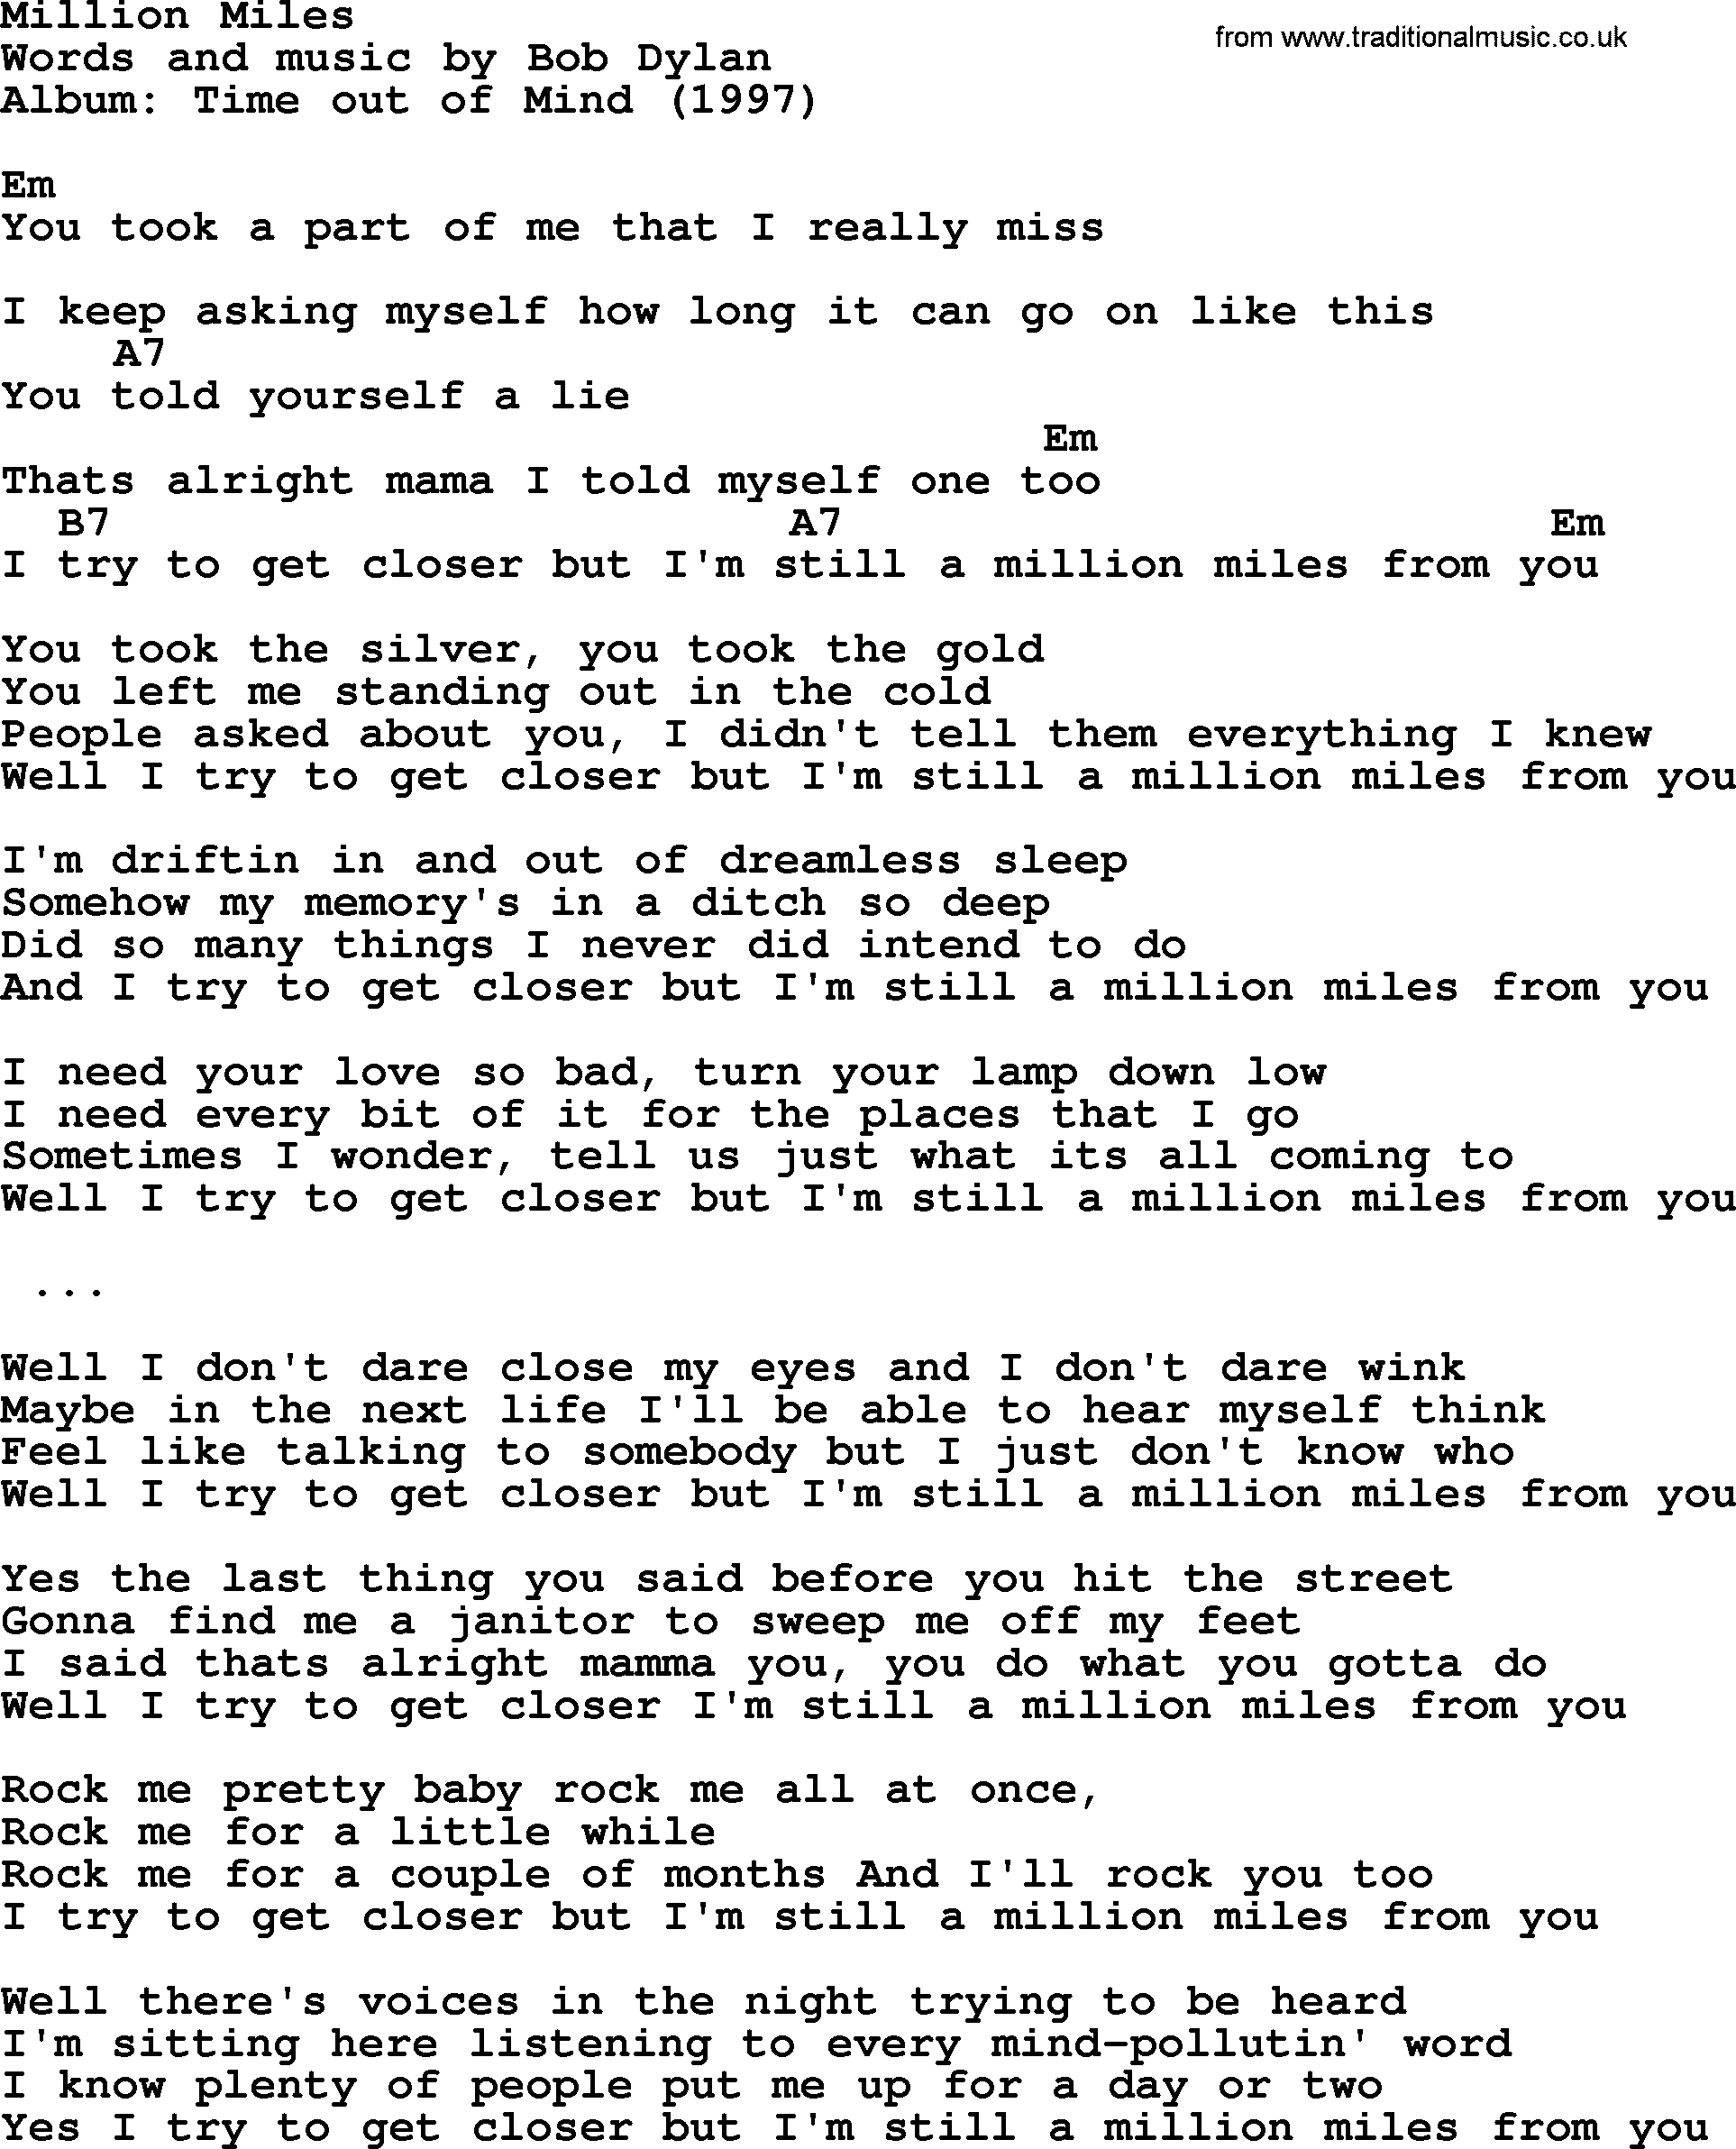 Bob Dylan song, lyrics with chords - Million Miles